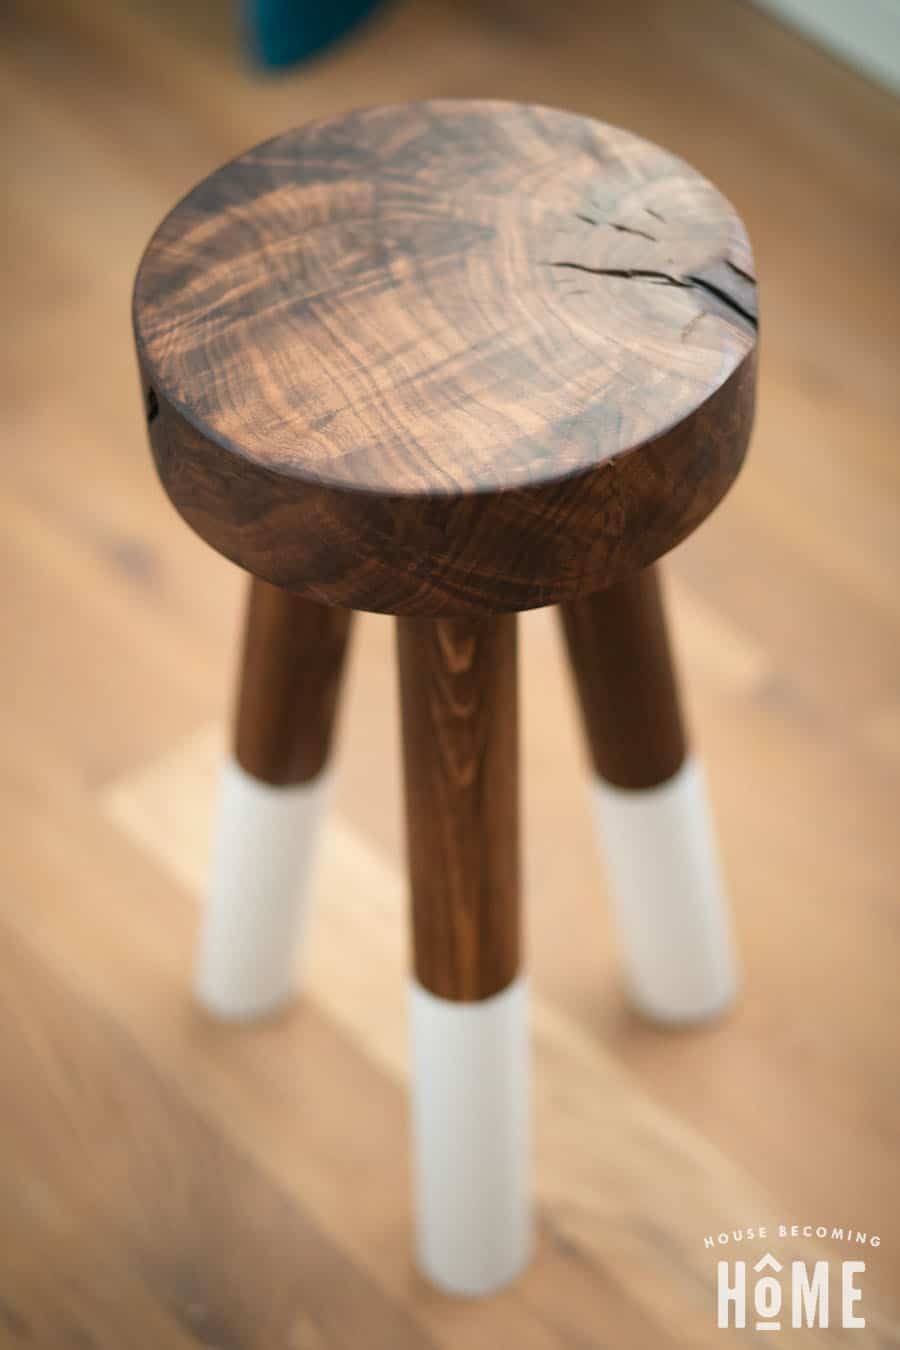 How to make a DIY walnut dip-dyed stool